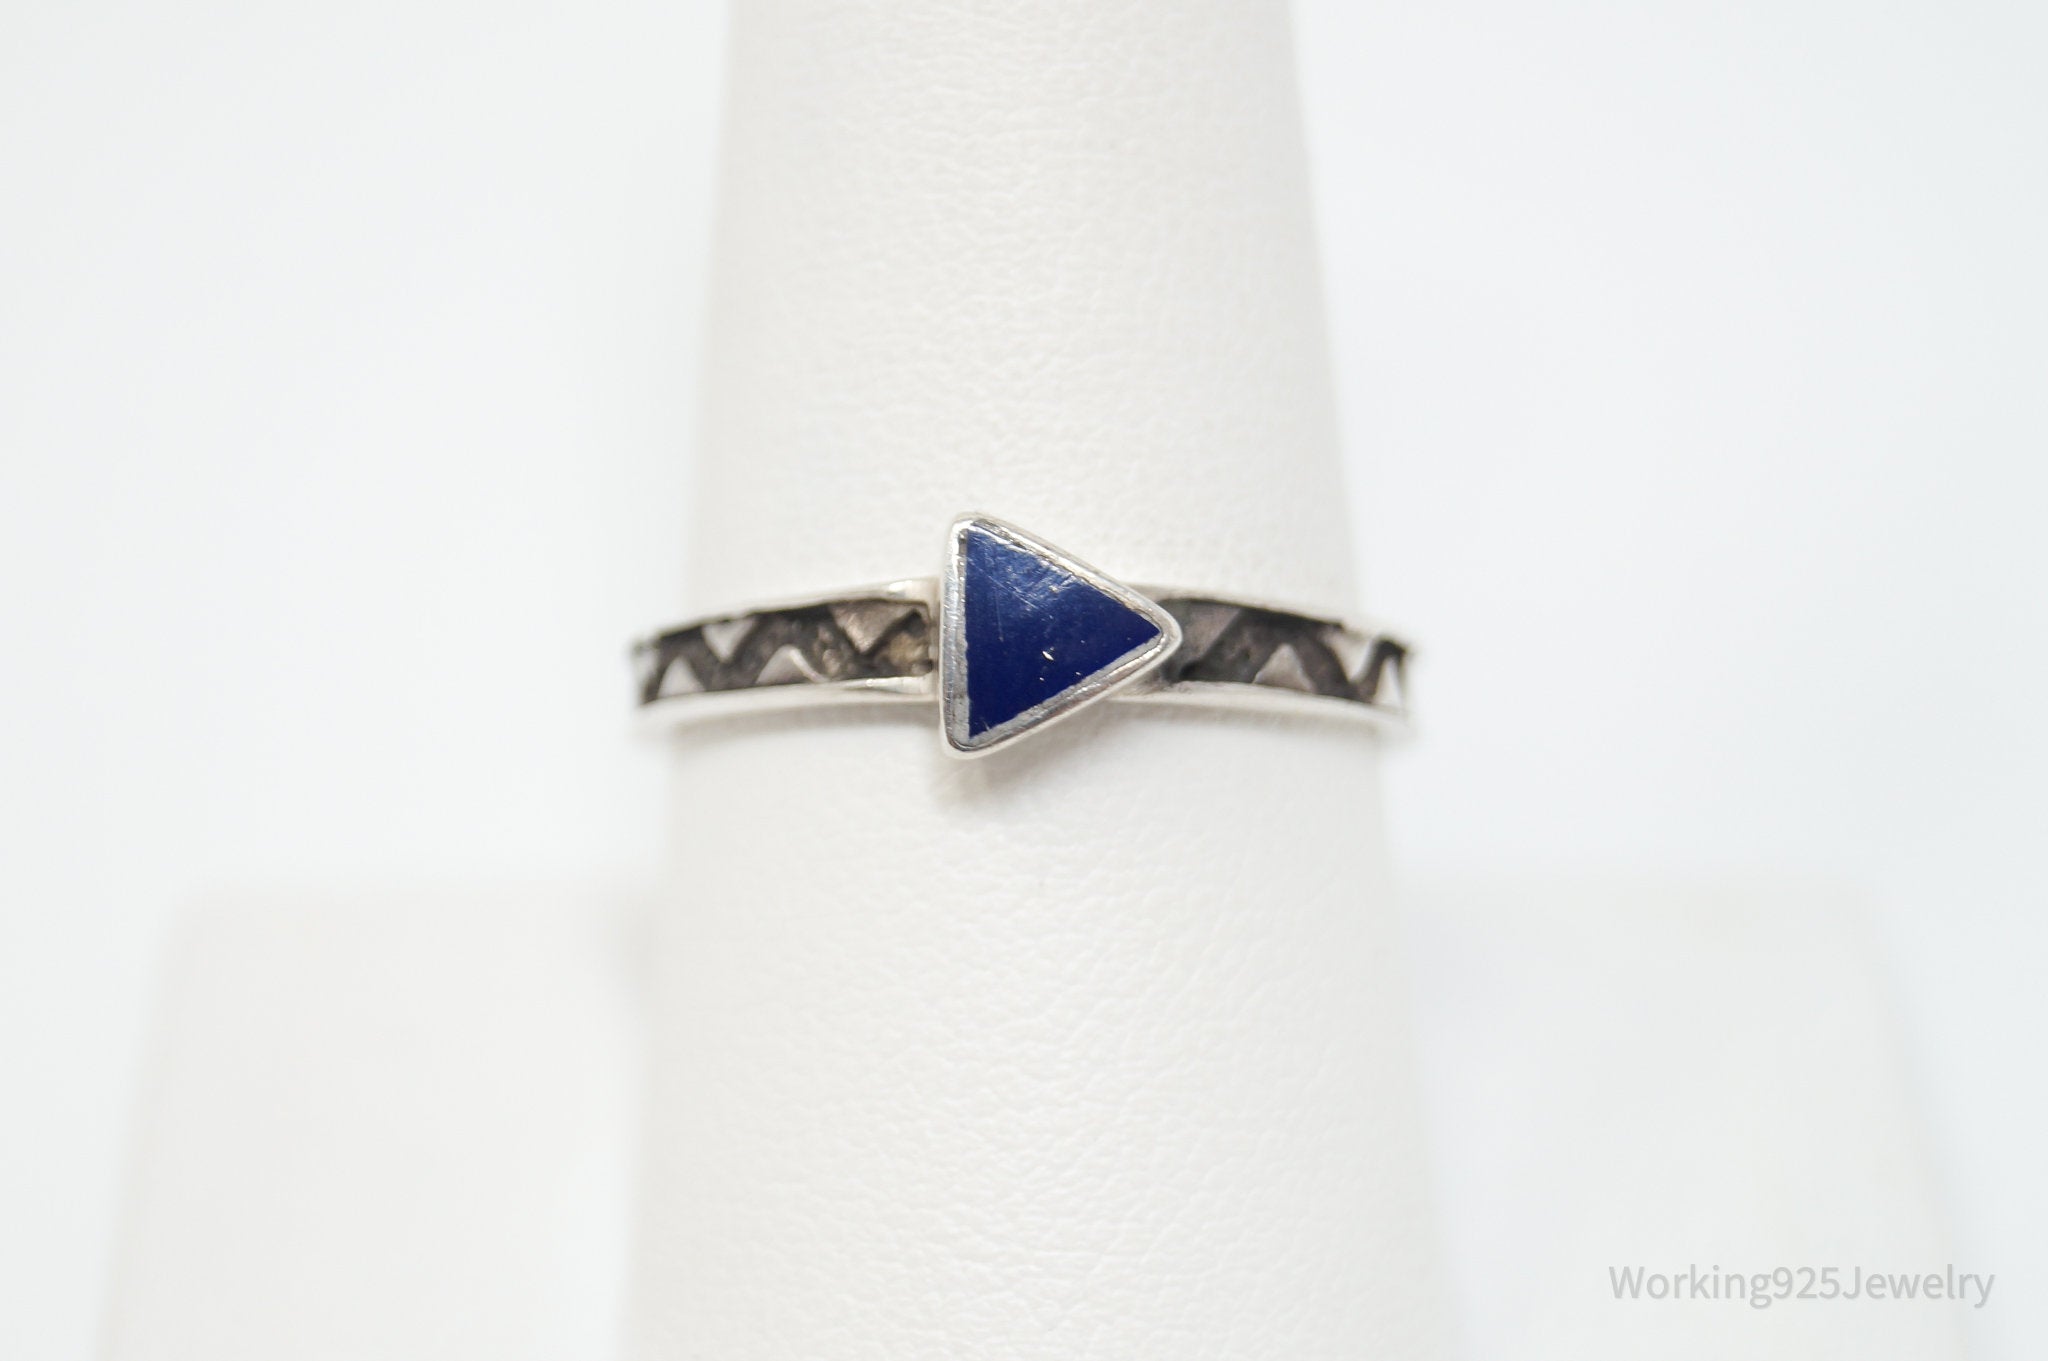 Vtg Carolyn Pollack Crushed Lapis Lazuli Sterling Silver Stacker Ring - Sz 8.75